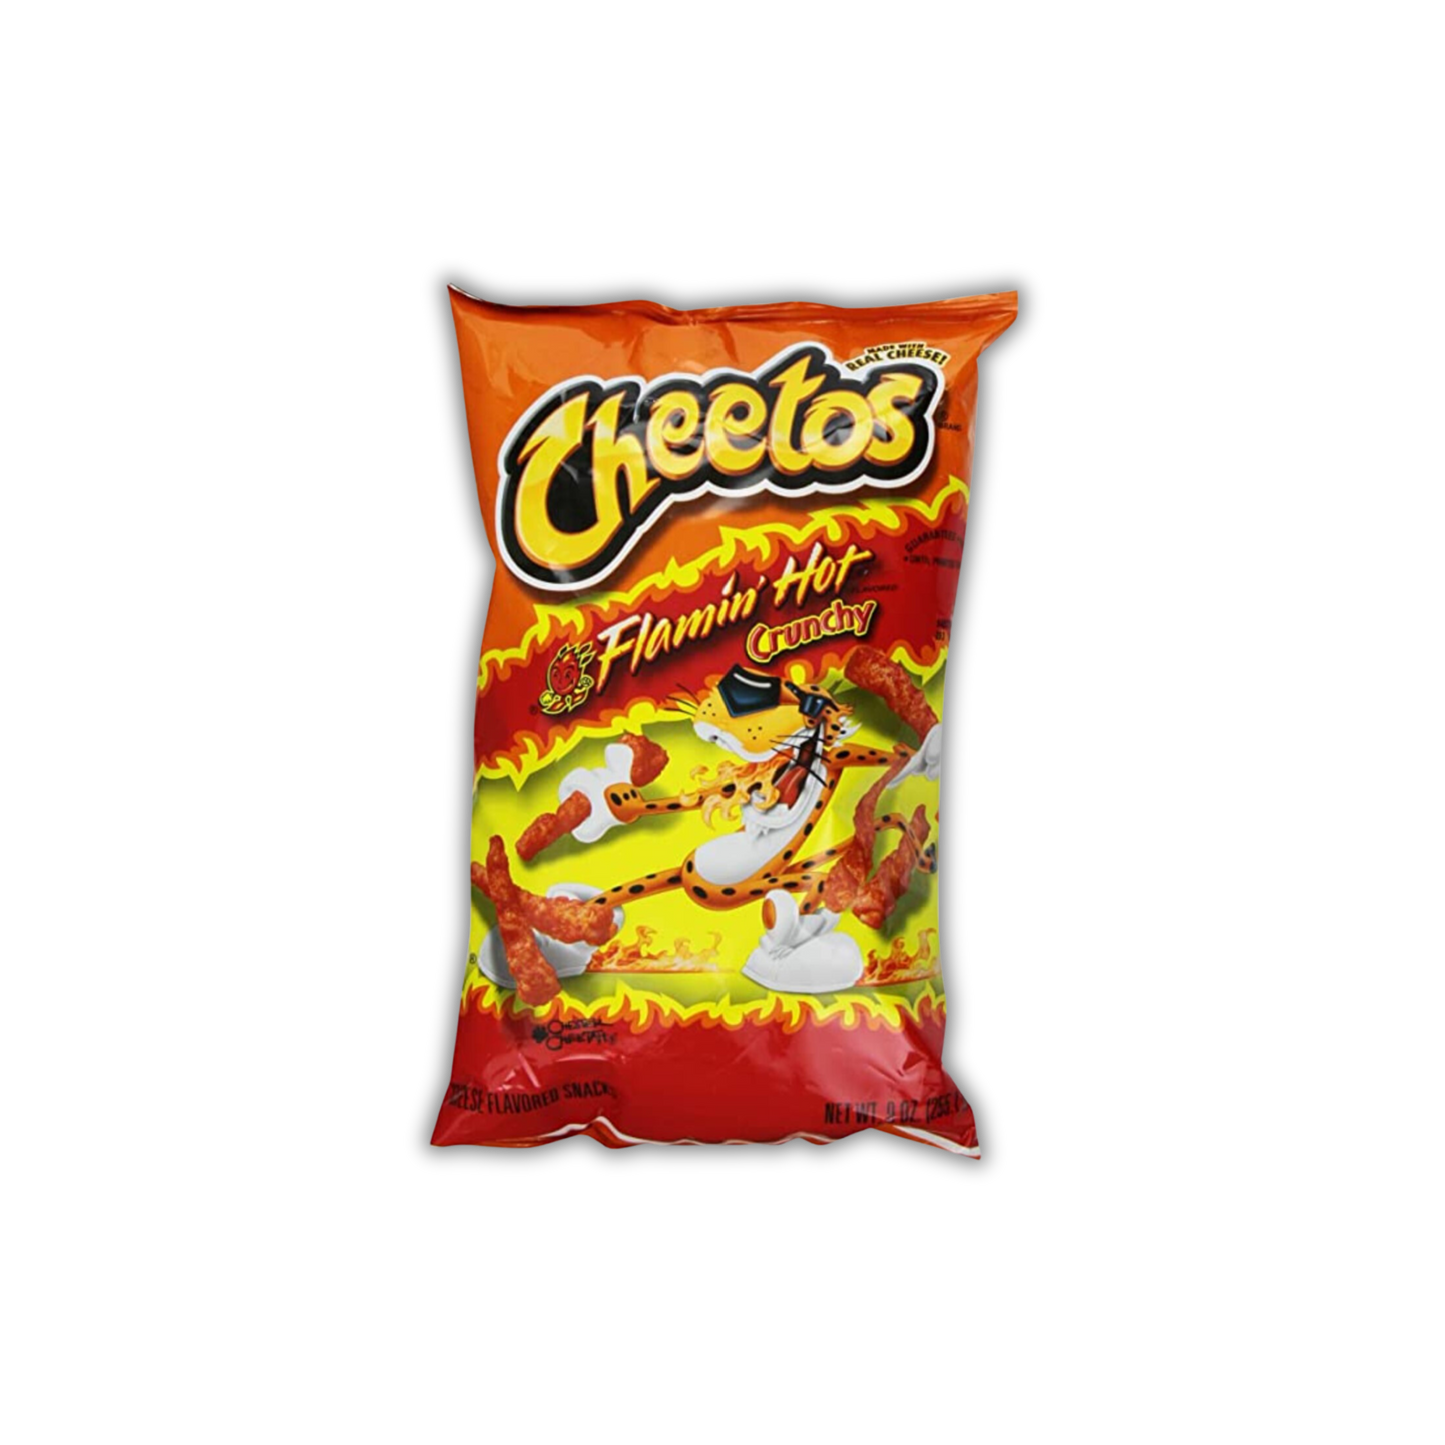 American Cheetos Flamin Hot Crunchy Pack